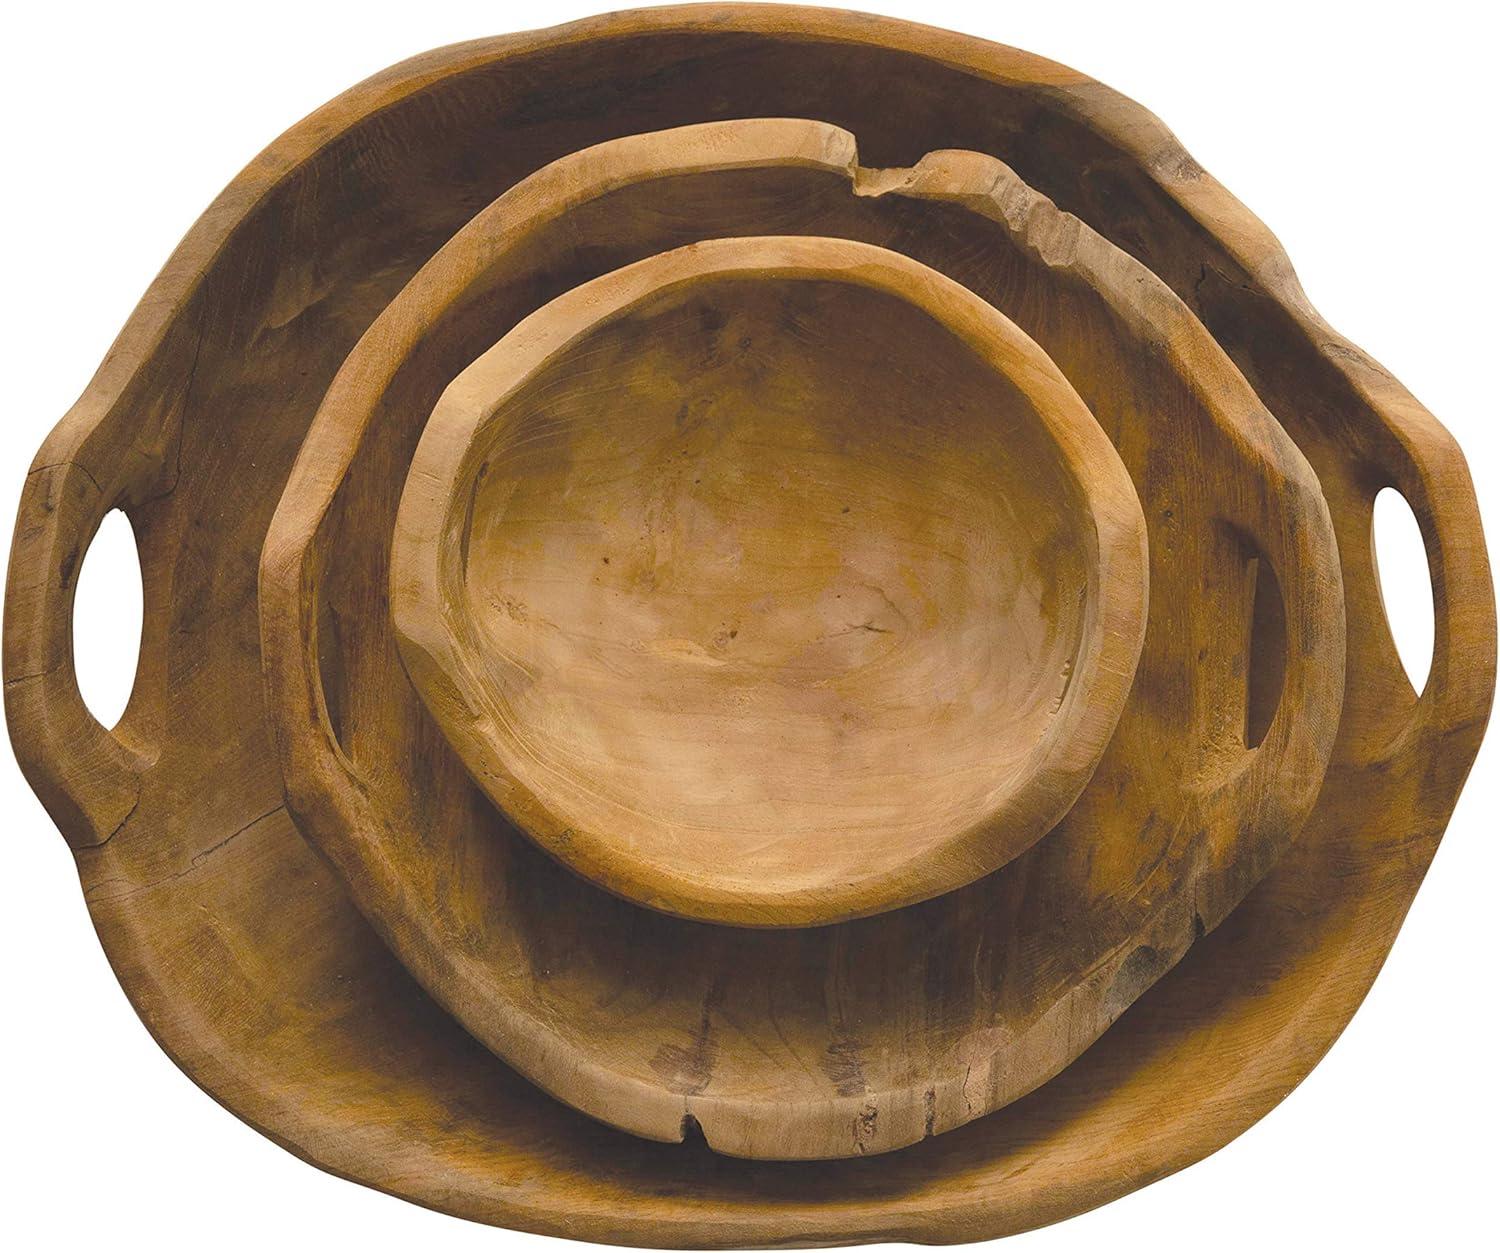 Hand-Carved Teak Wood Serving Bowls with Handles, Set of 3